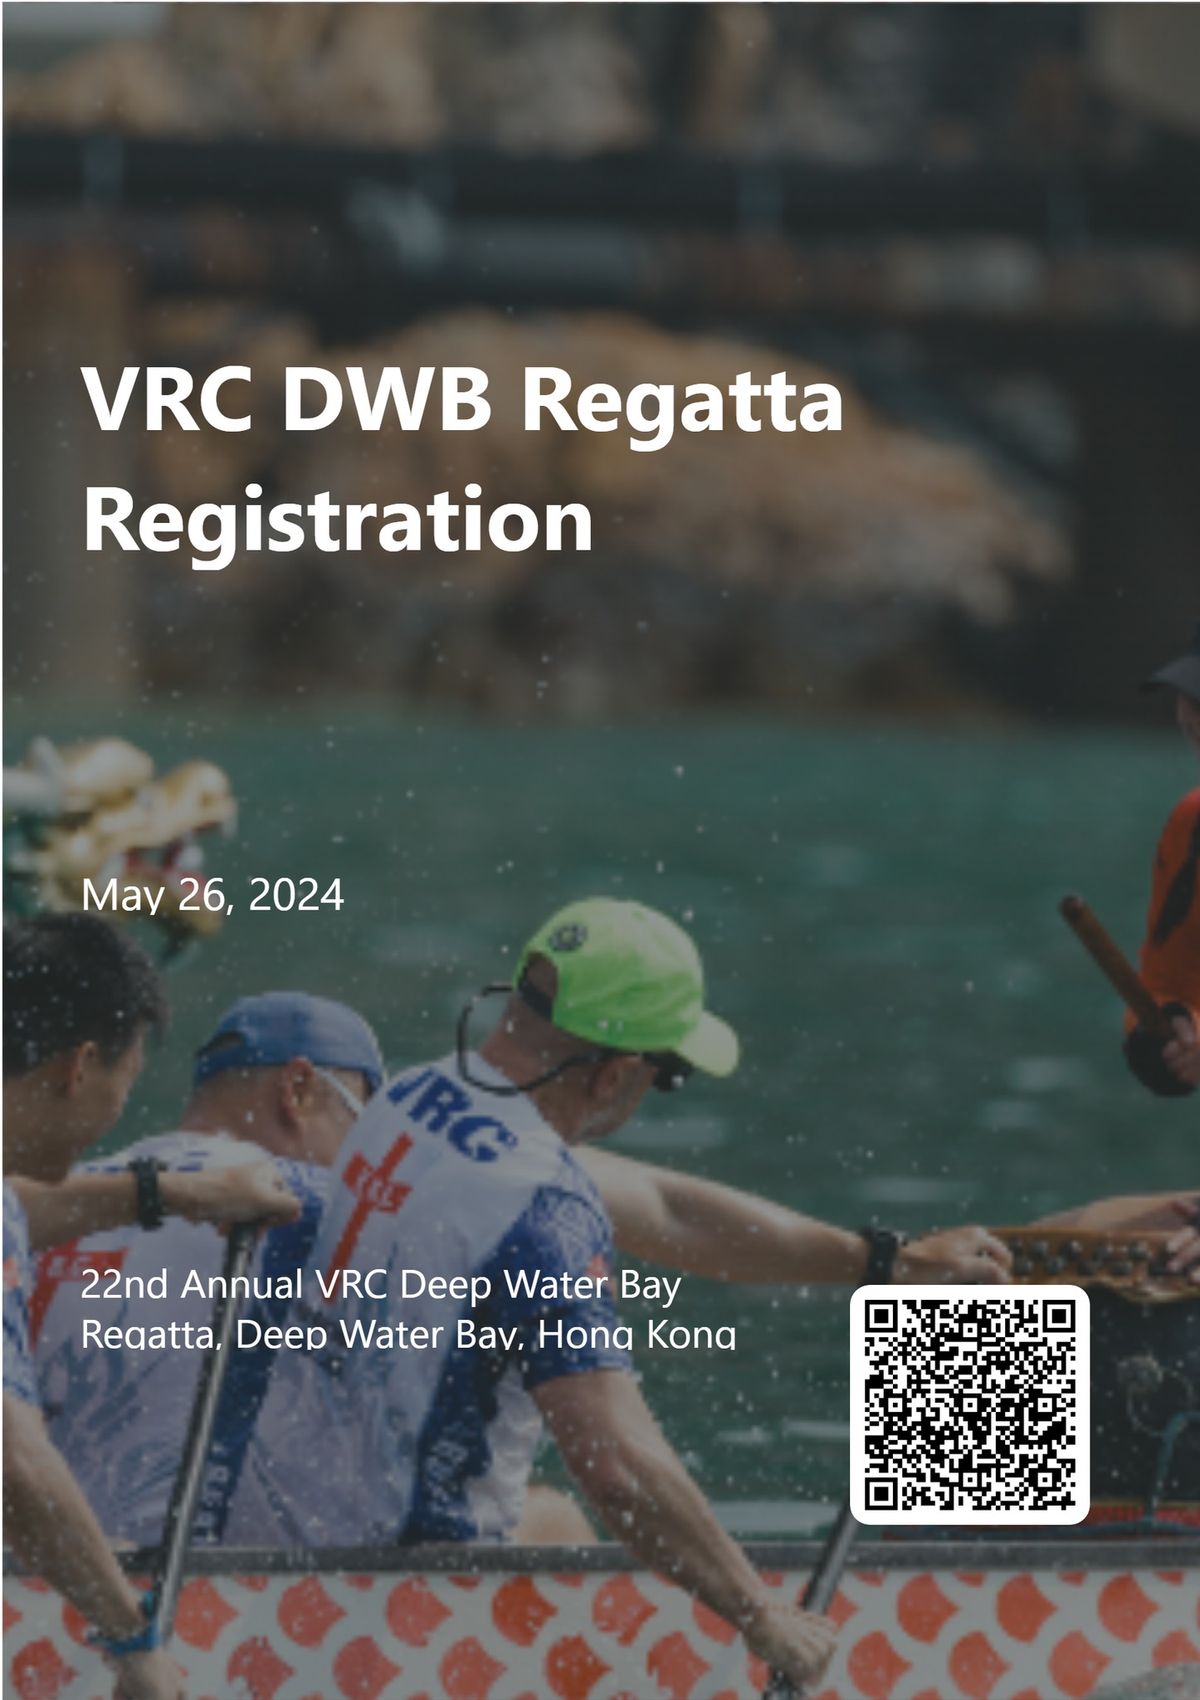 22nd Annual VRC Deep Water Bay Regatta